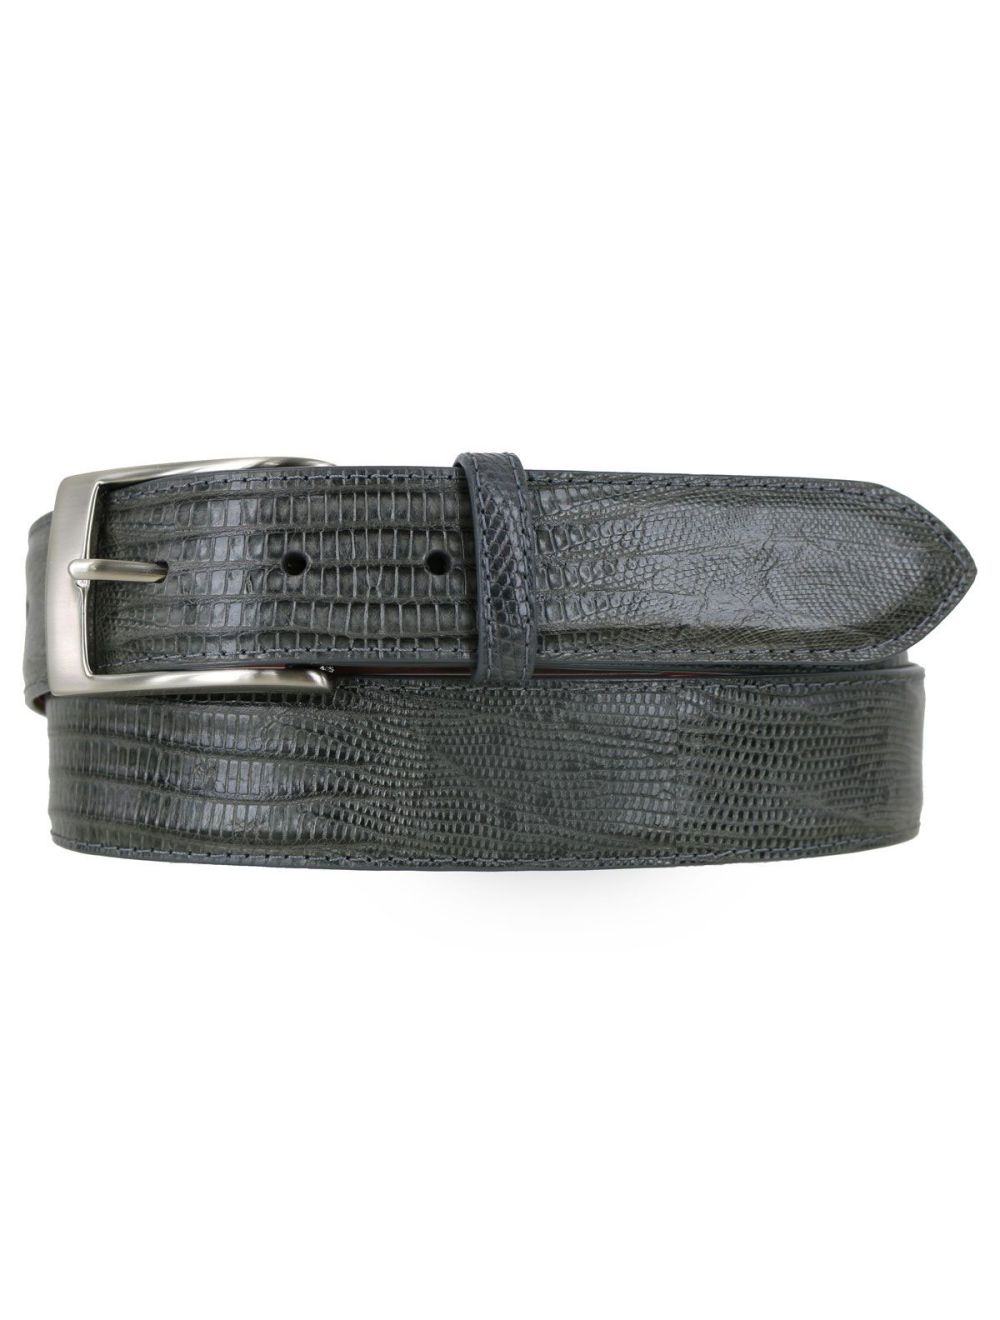 Custom MM Belt Buckle | Machinist Mates Belt Buckle